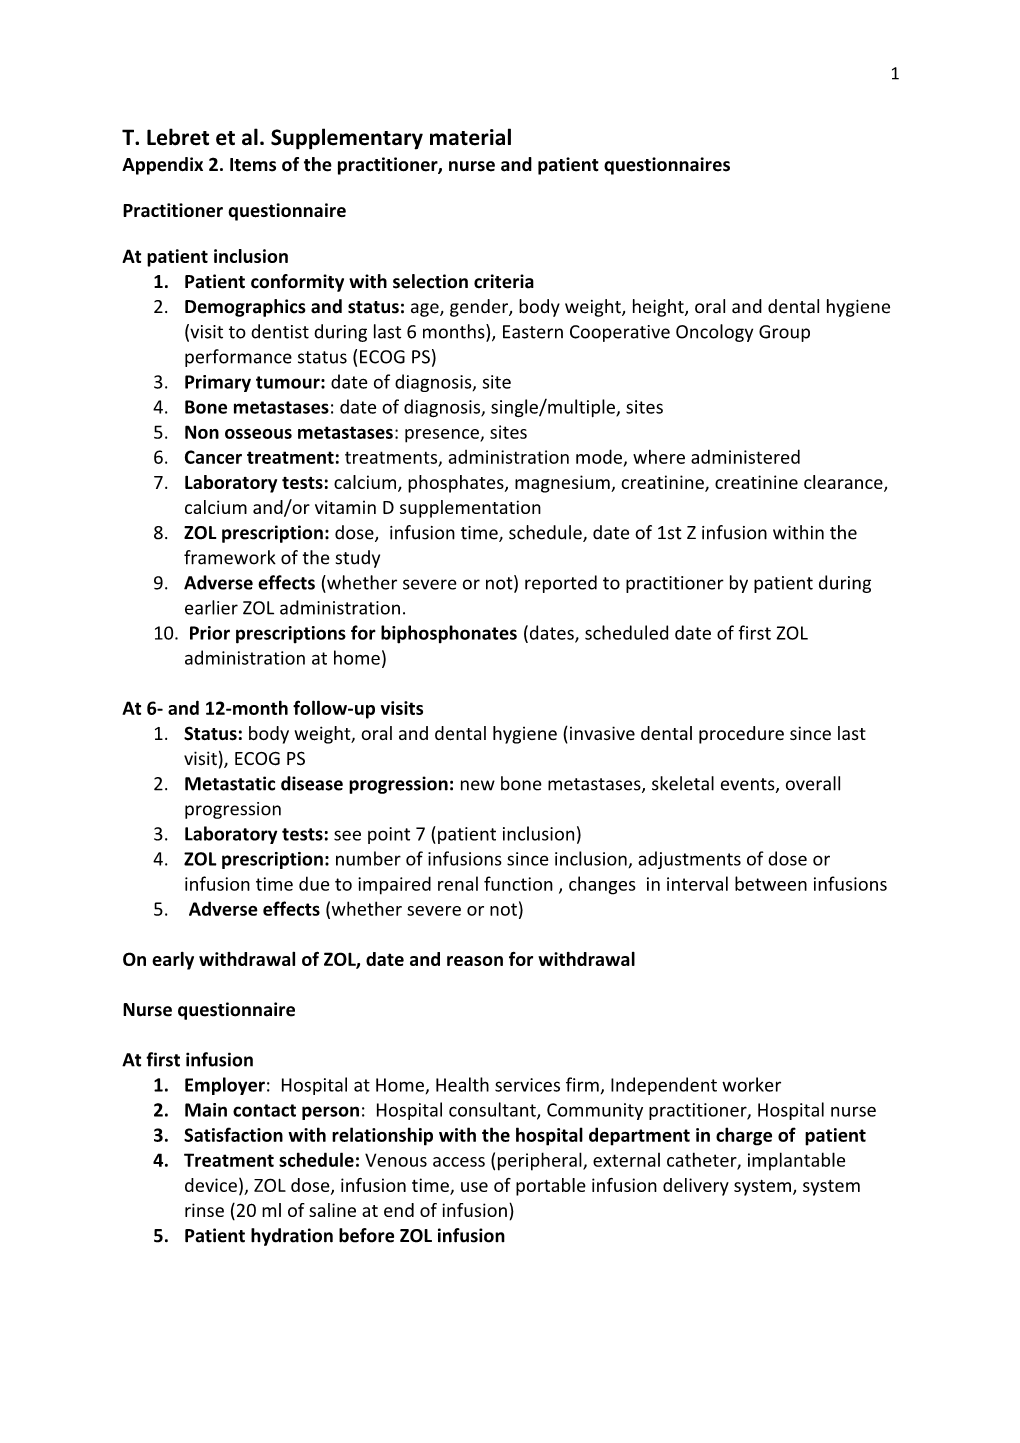 Appendix 2. Items of the Practitioner, Nurse and Patient Questionnaires